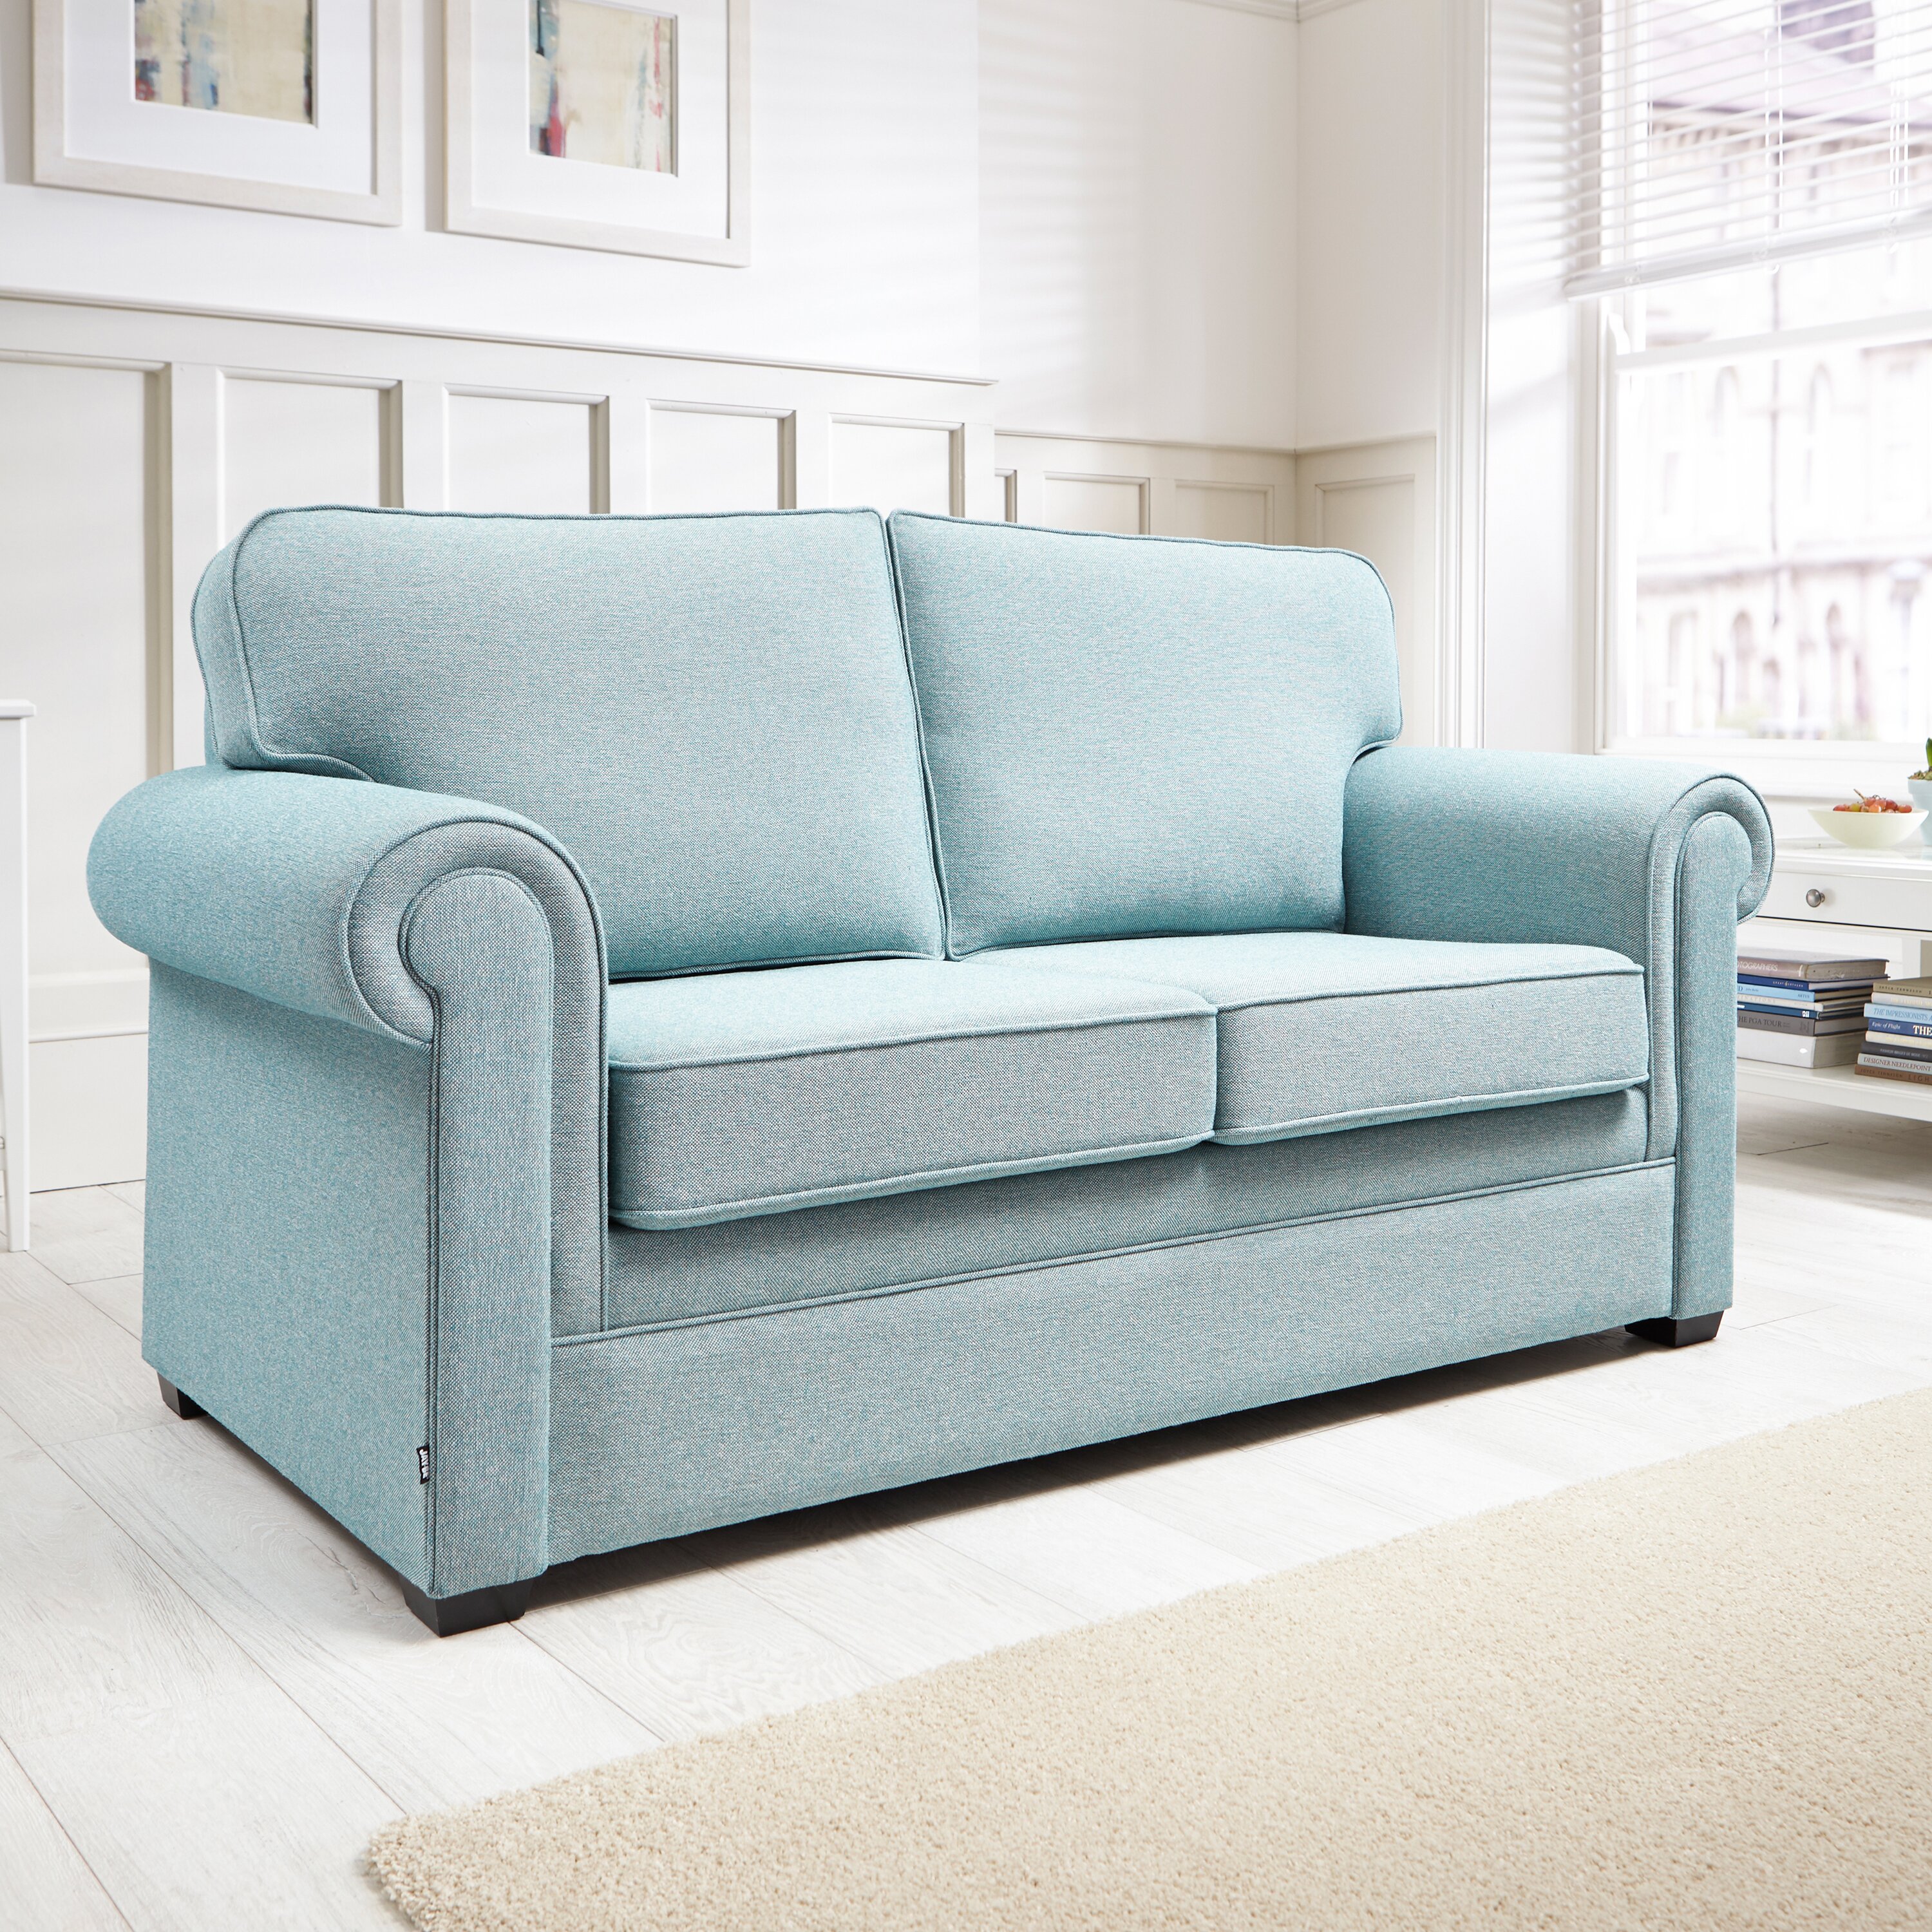 JayBe 2 Seater Fold Out Sofa Wayfair UK